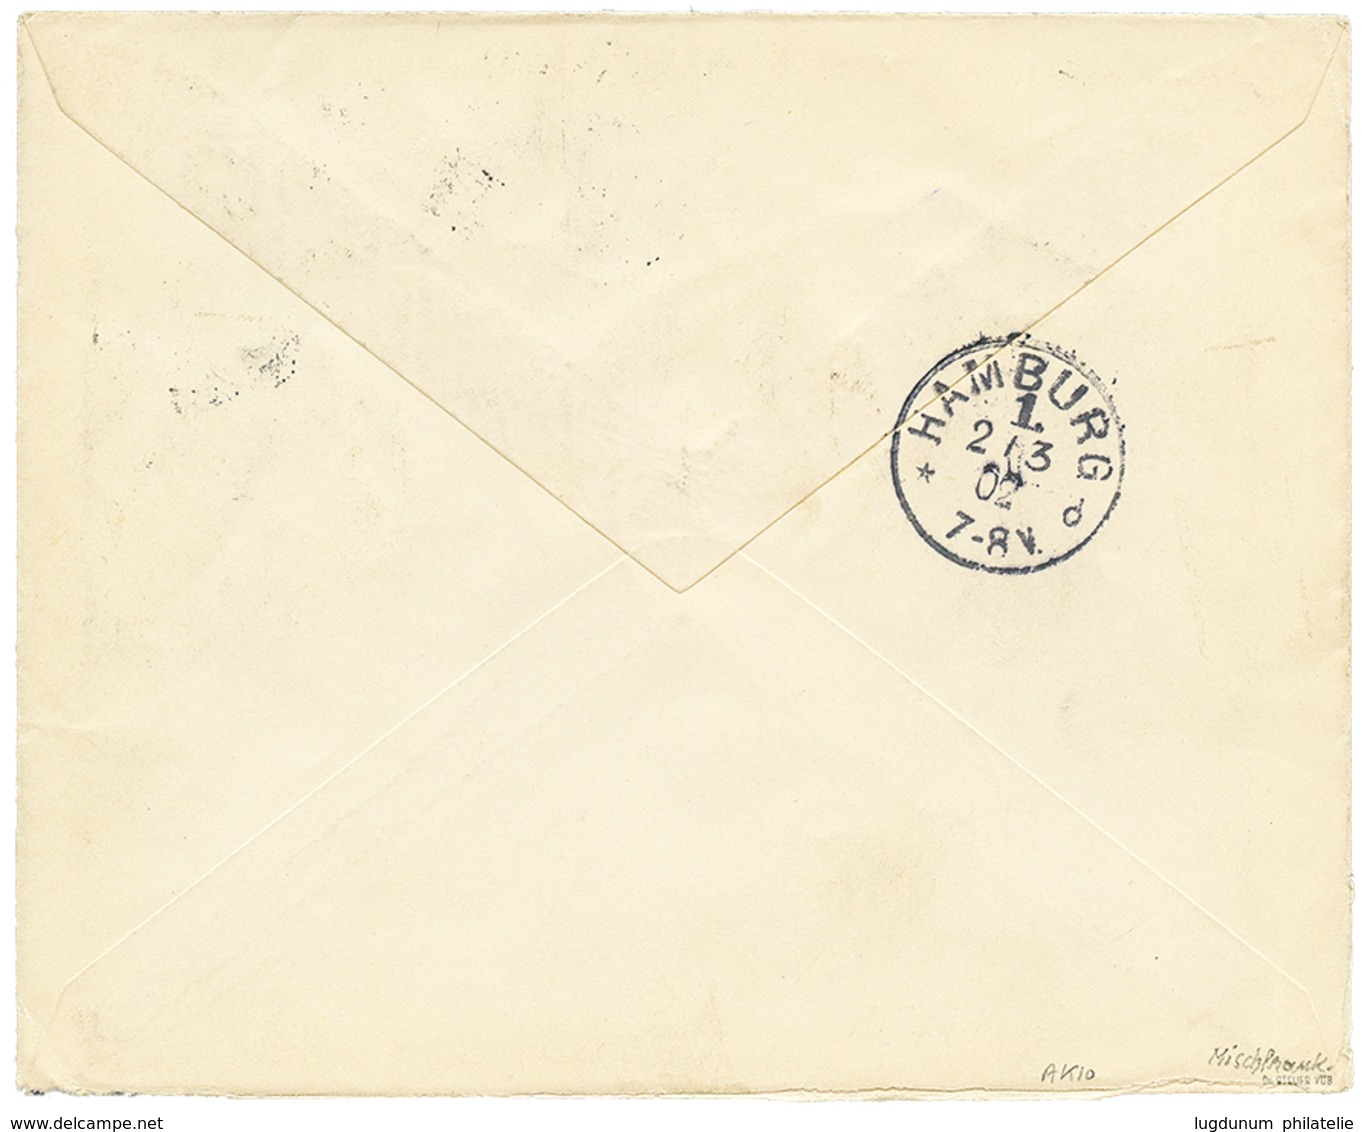 1057 1902 25pf(n°5I) + 25pf(n°19) + 5pf(n°2II) + 5pf(n°16) Canc. SHANGHAI On REGISTERED Envelope To HAMBURG. Rare Mixed  - Deutsche Post In China